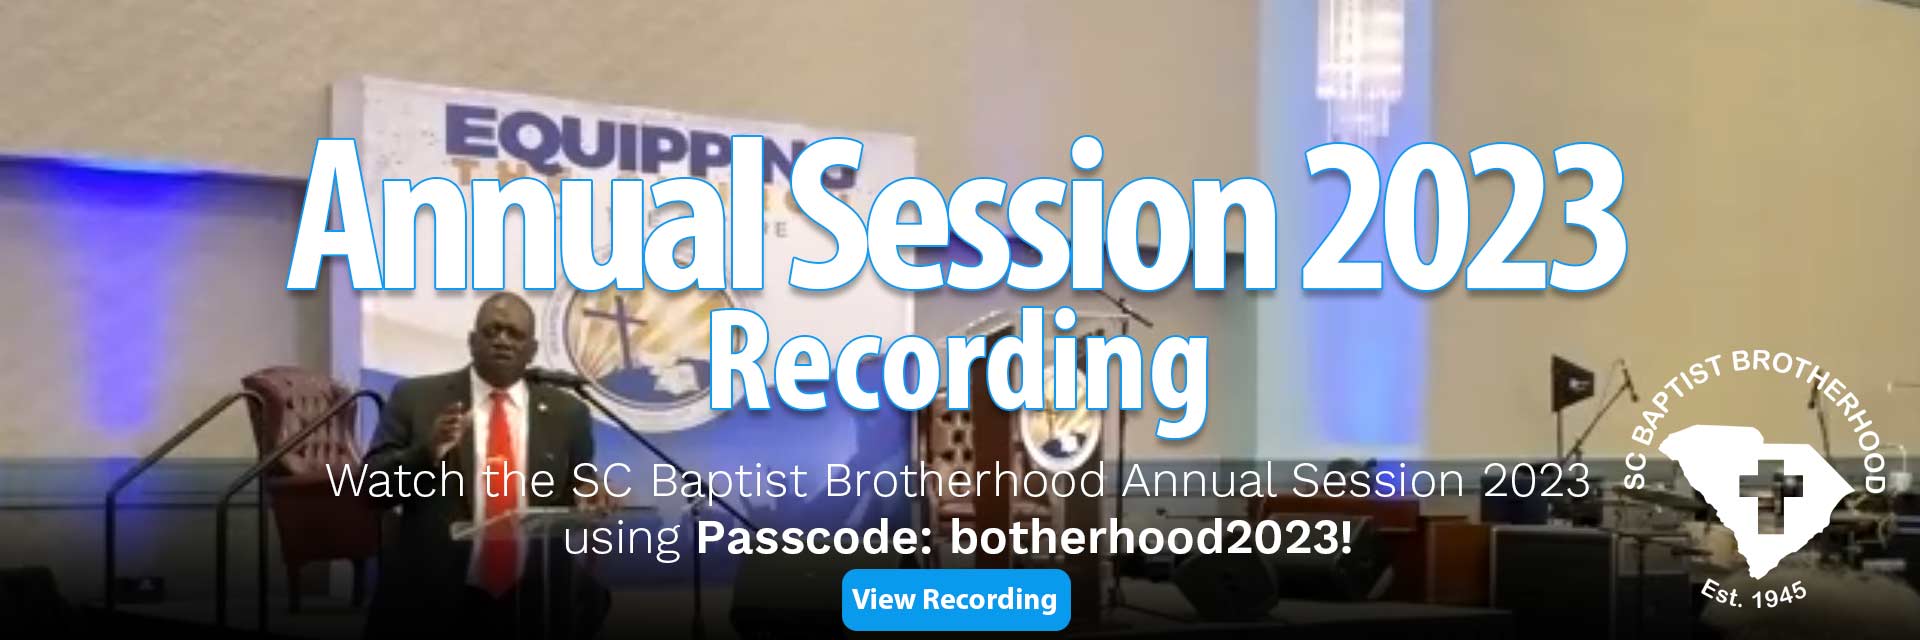 Annual Session Recording